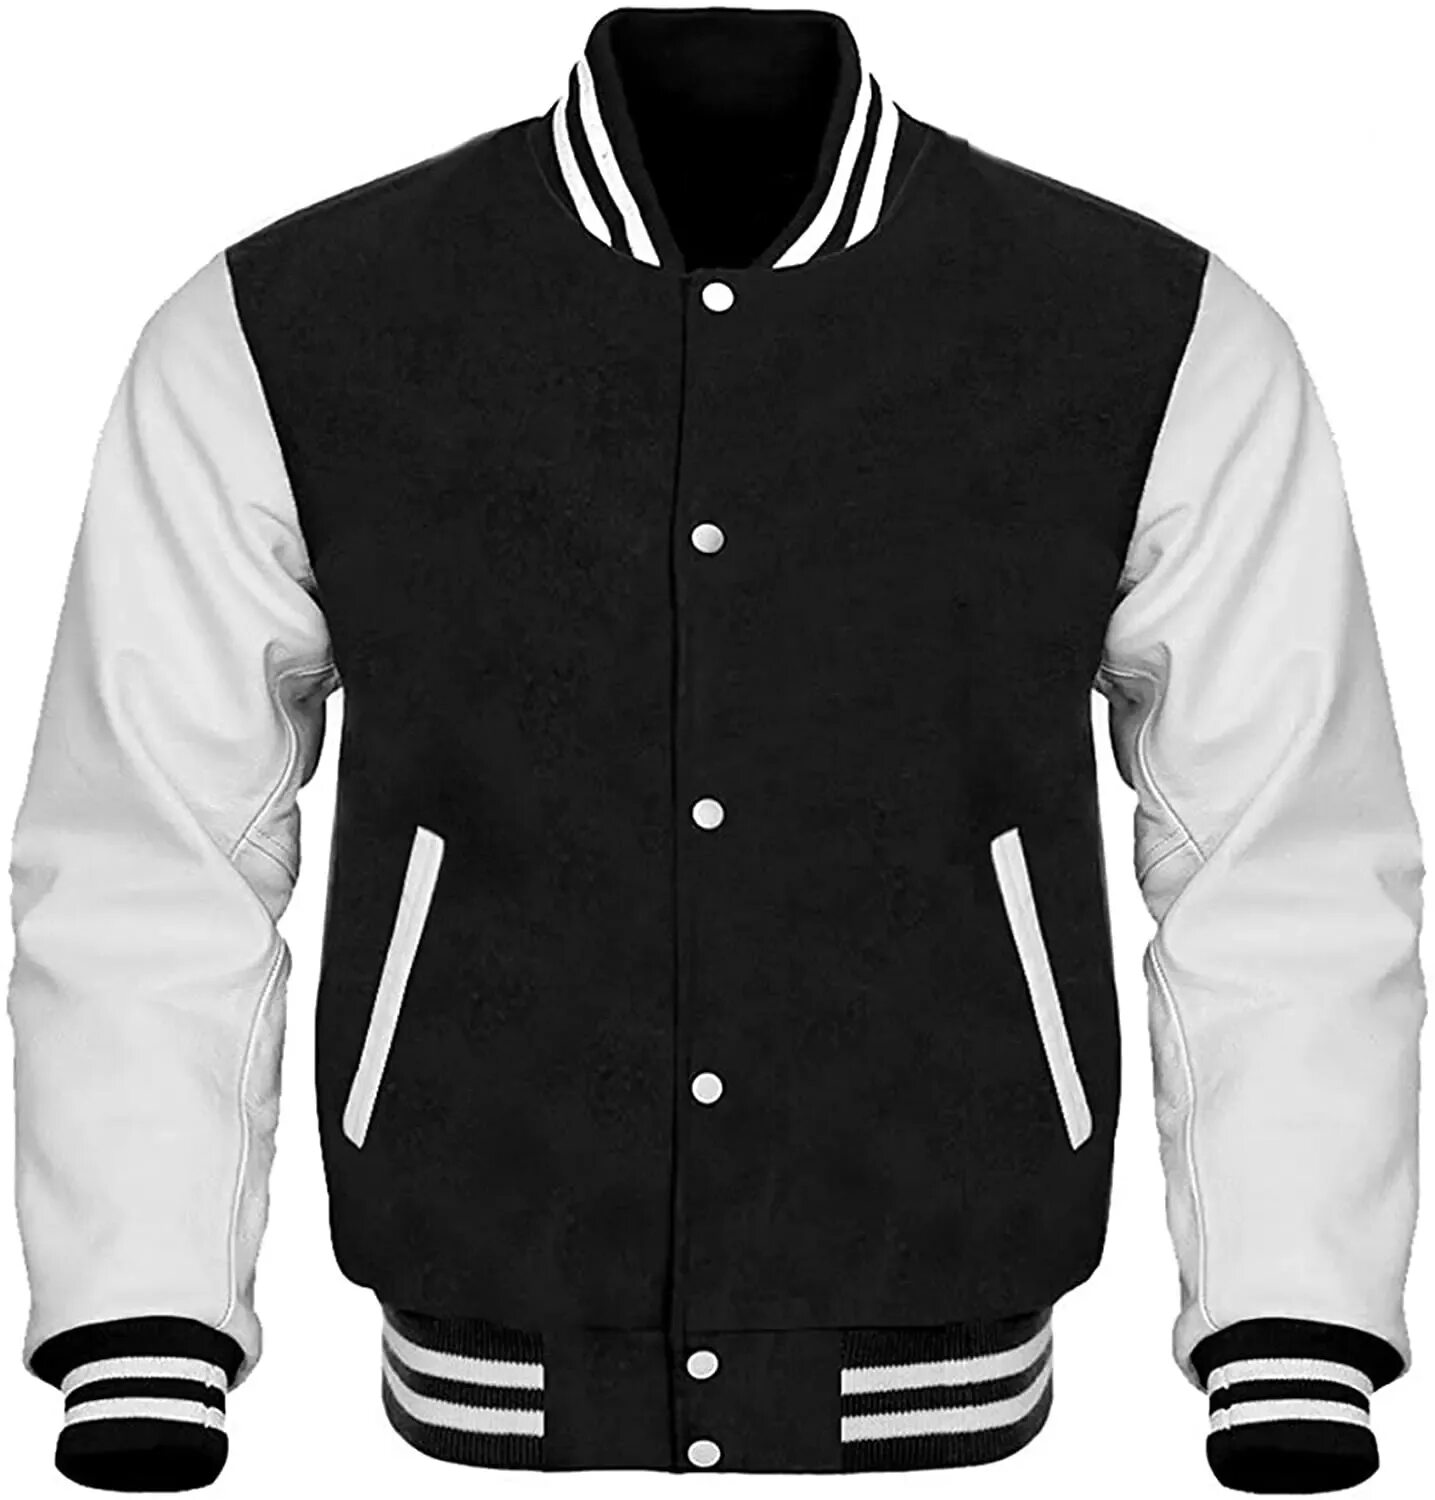 Черная кофта с белыми рукавами. Varsity Jacket Letterman куртка. Куртки Varsity Jacket Бейсбол. Бомбер мужской Varsity Jacket. Леттерман Джекет бомбер.